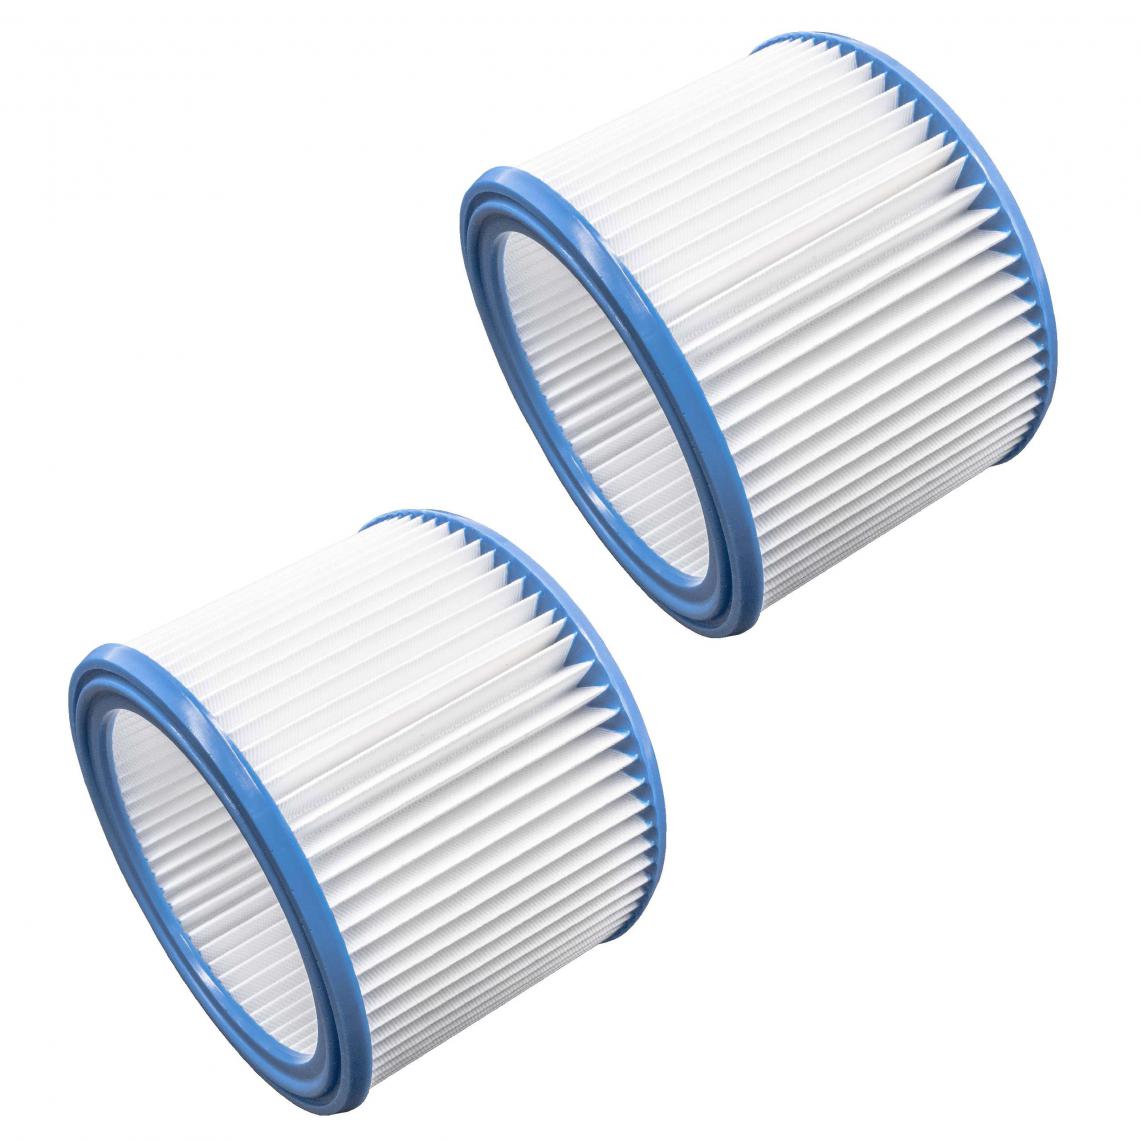 Vhbw - vhbw Set de filtres 2x Filtre plissé compatible avec Nilfisk Aero 21 / 21 INOX, 26, 31 INOX aspirateur à sec ou humide - Filtre à cartouche - Accessoire entretien des sols